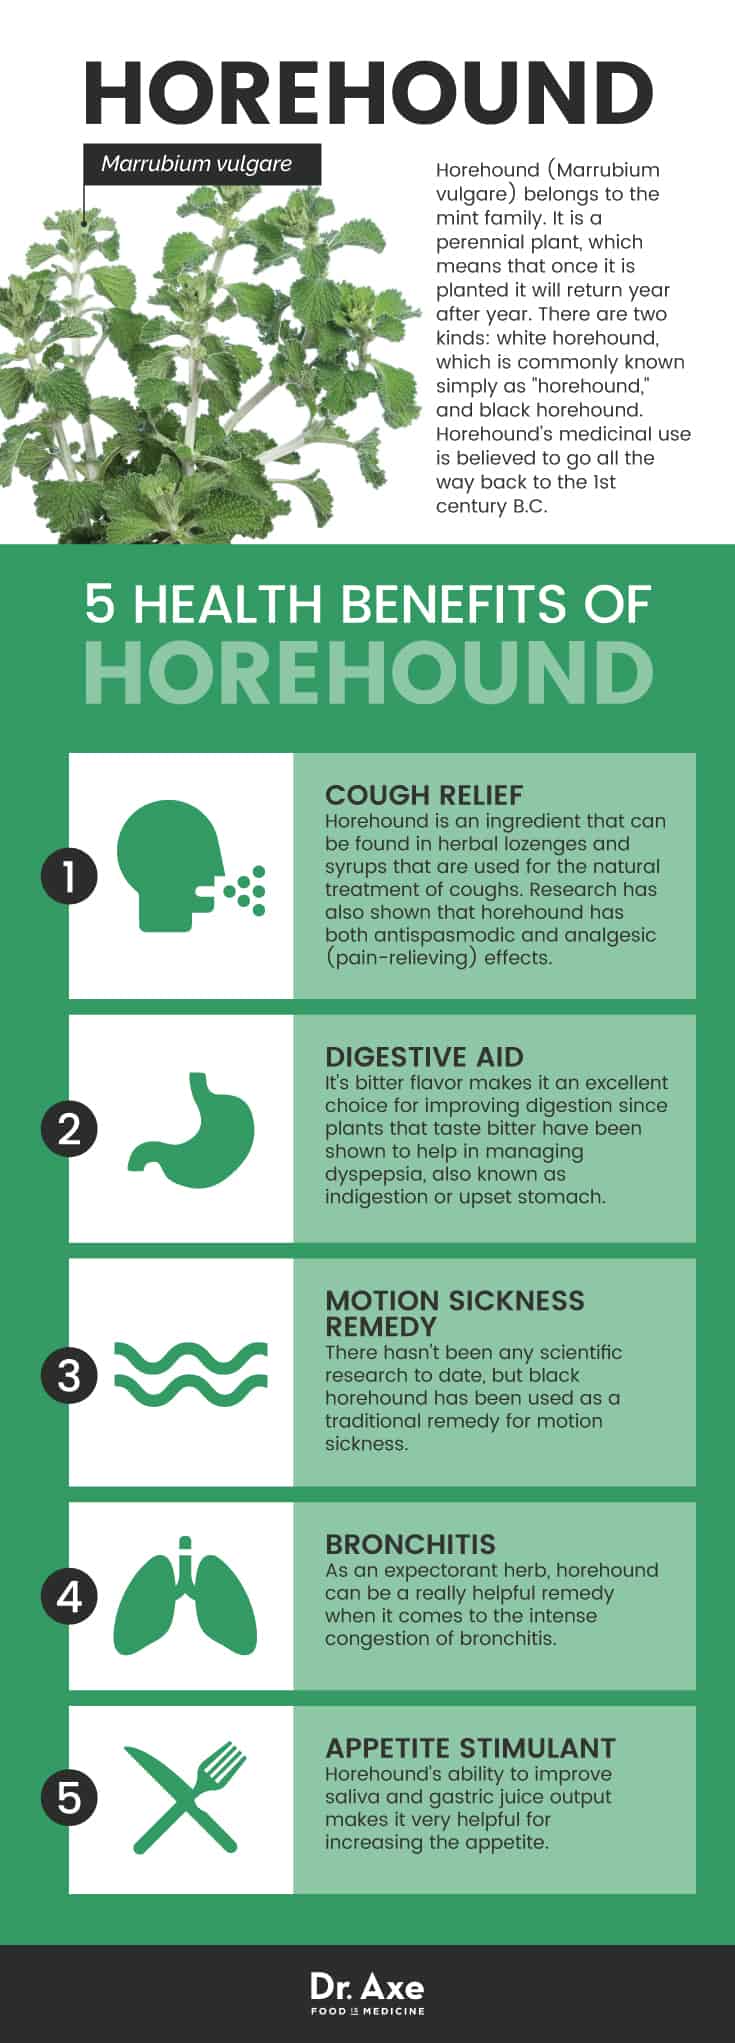 Horehound benefits - Dr. Axe